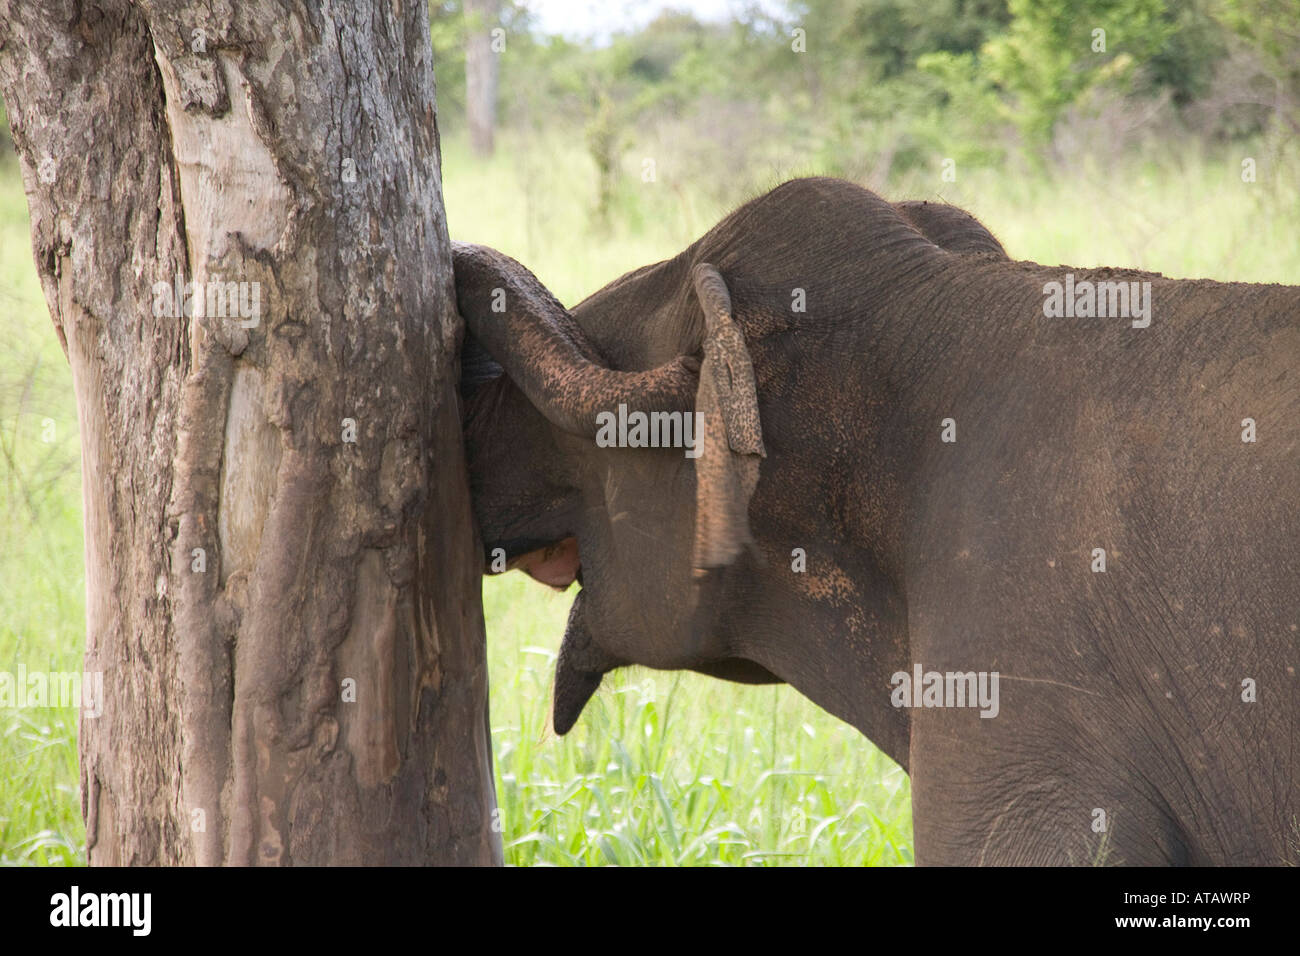 Asiatic elephant rubbing against tree Stock Photo